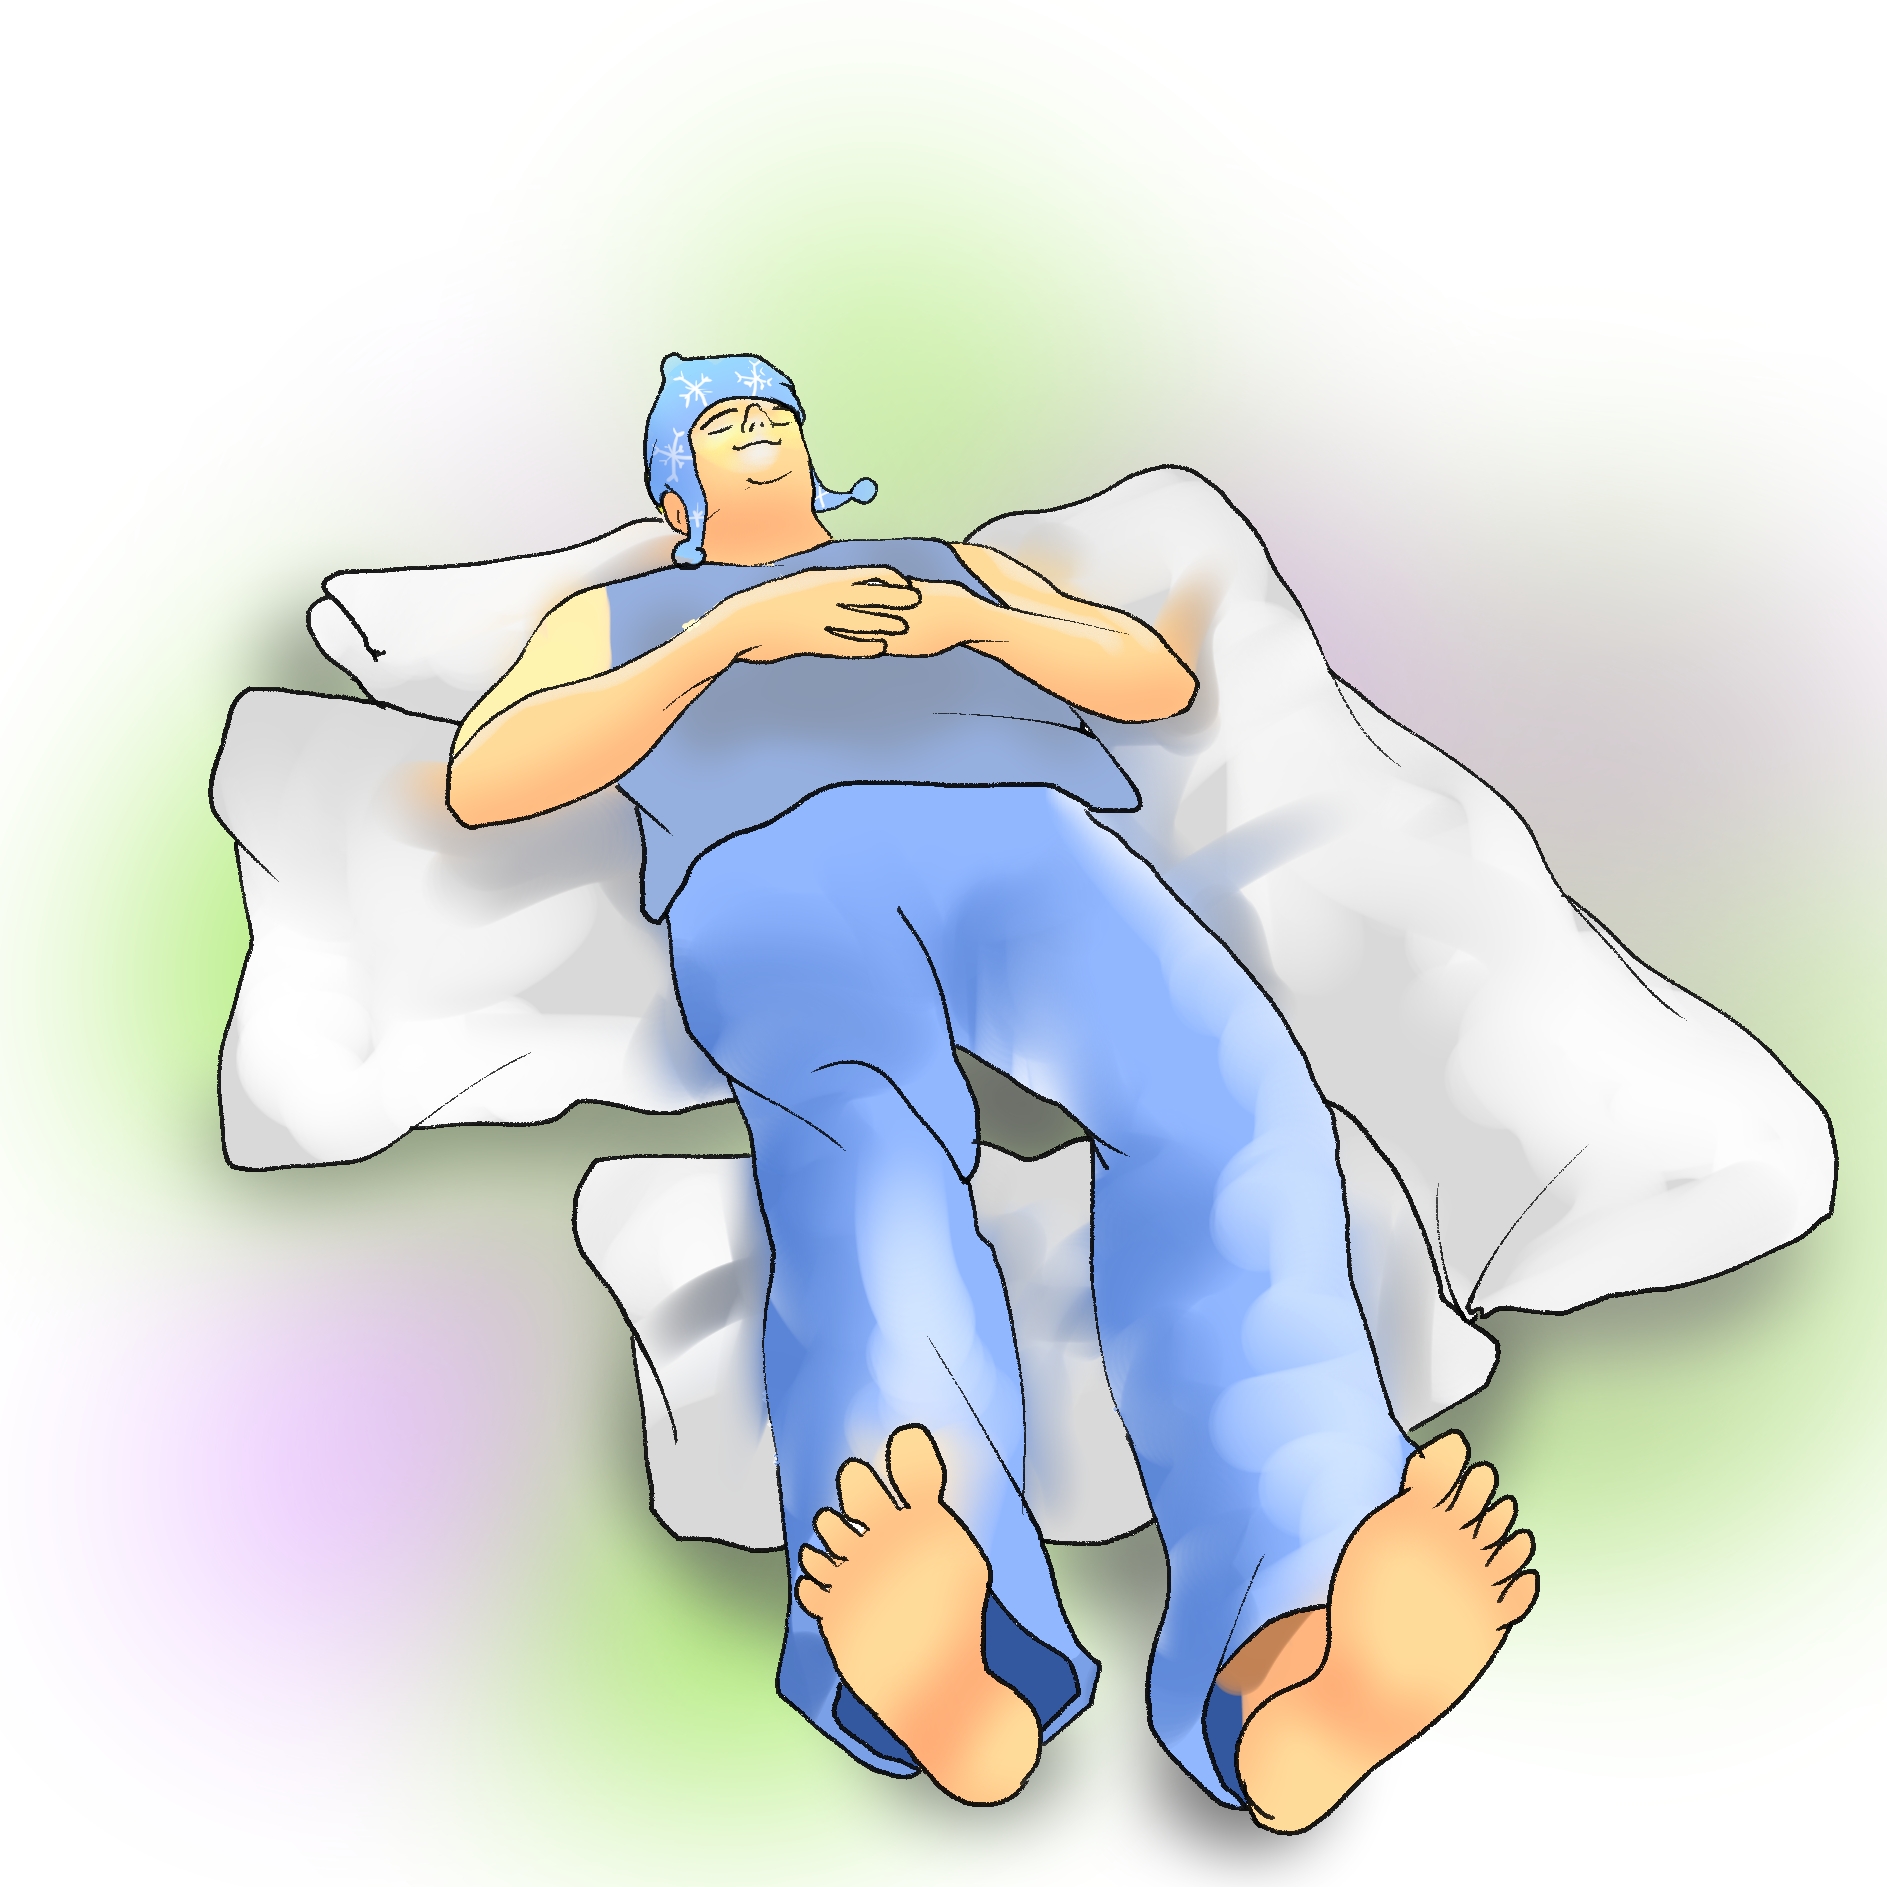 Pillow Between Knees? Change the Way You Sleep!